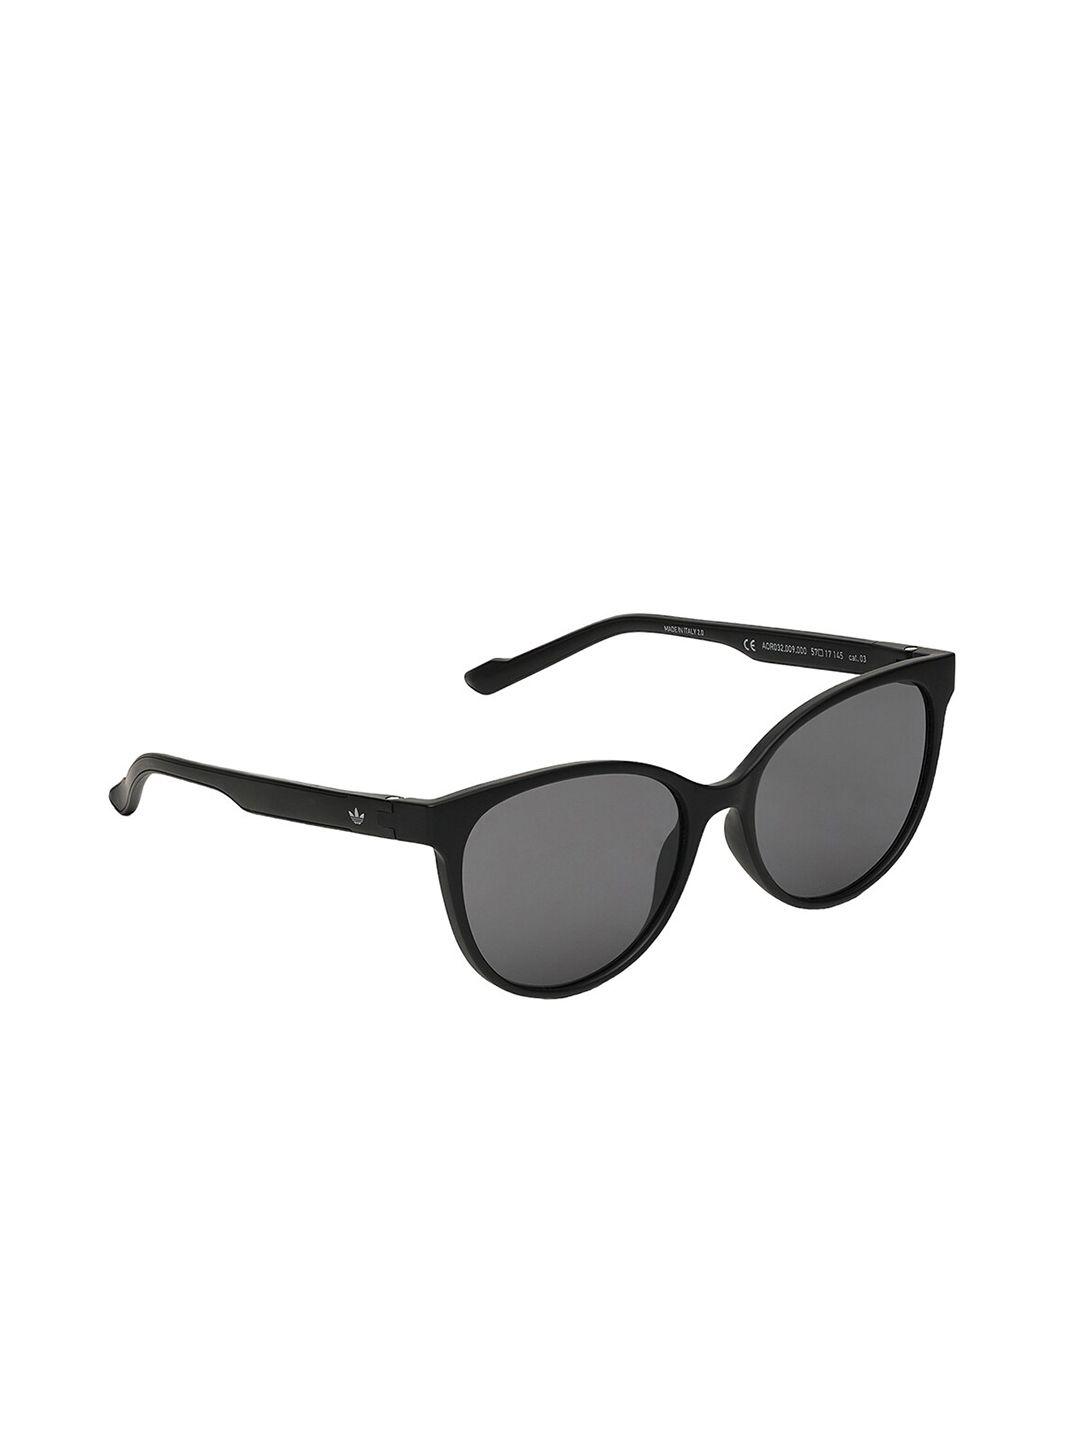 adidas-women-uv-protected-oval-sunglasses